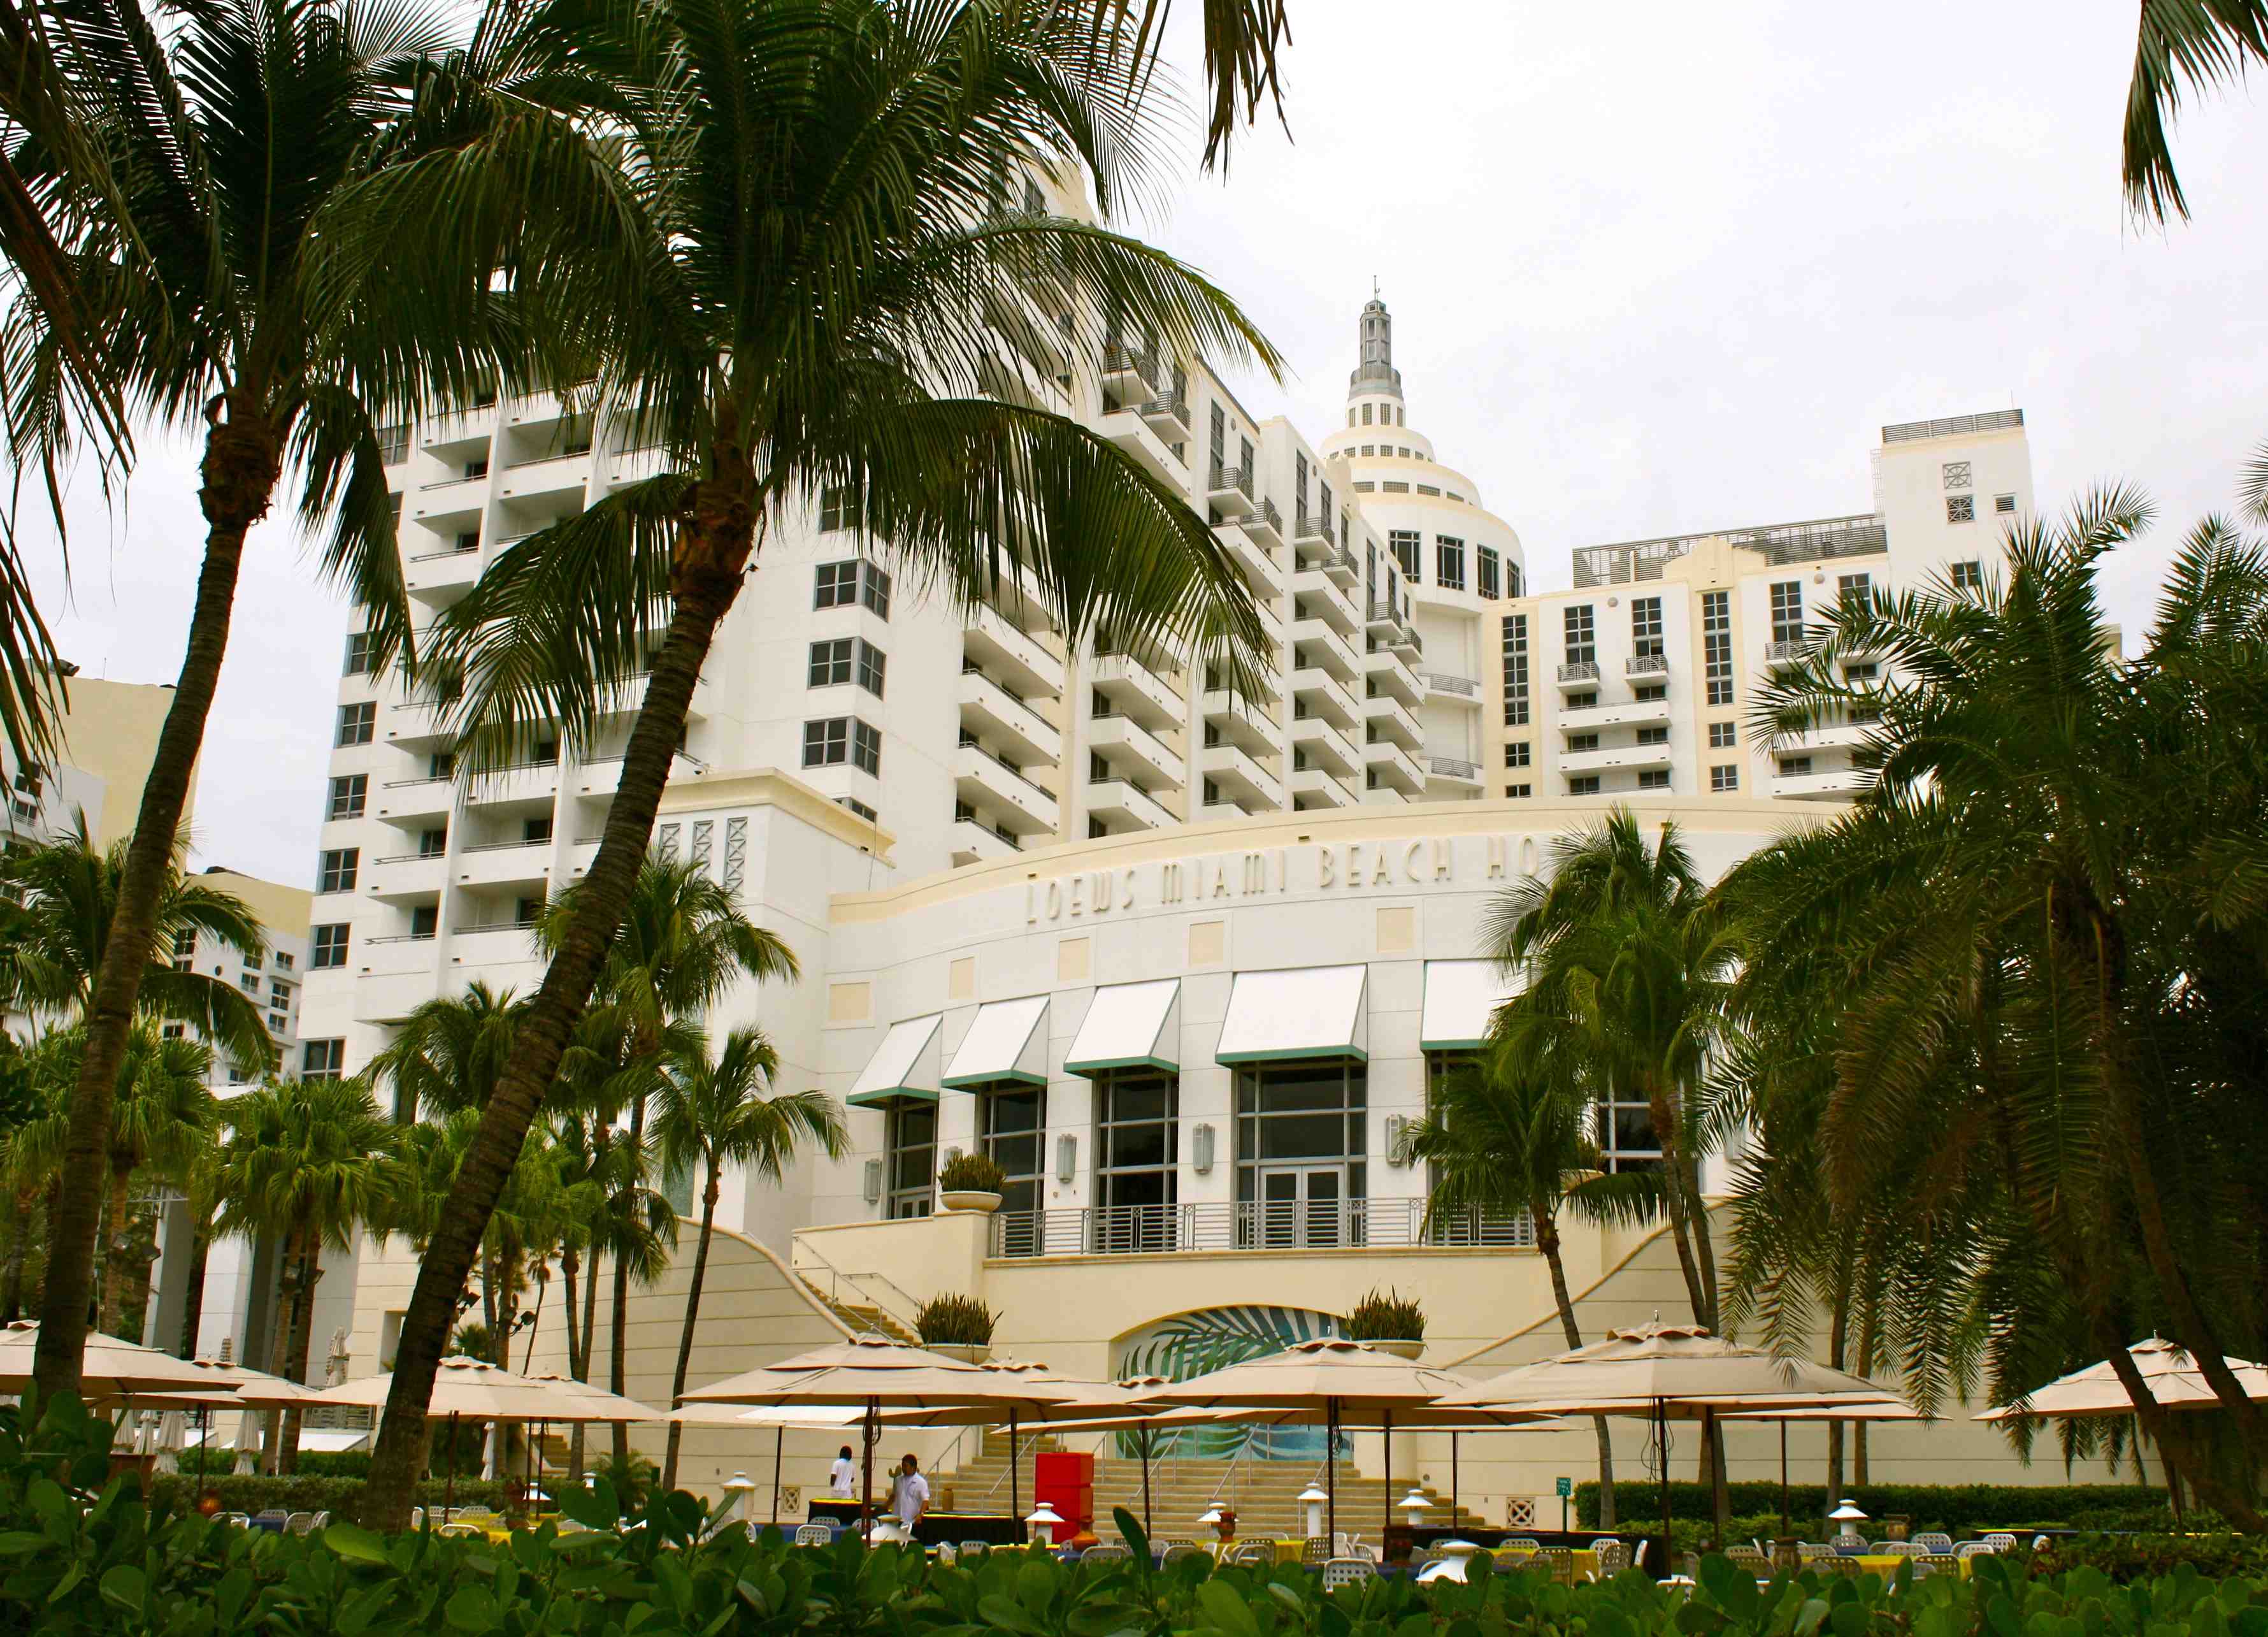 Lowes Miami Beach Hotel, Resort, Florida, South Beach